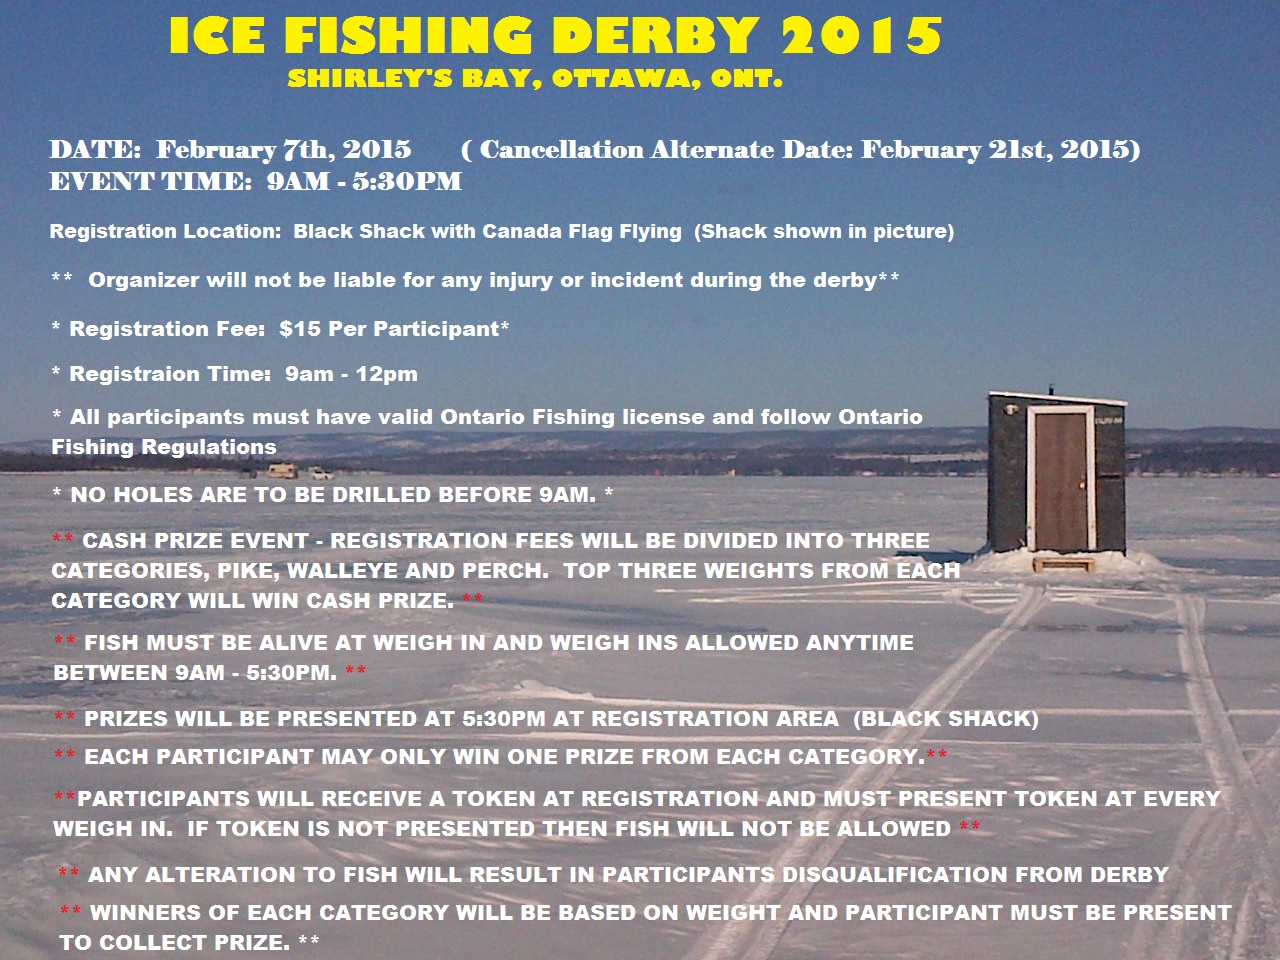 SHIRLEY'S BAY ICE FISHING DERBY FLYER 2015.jpg